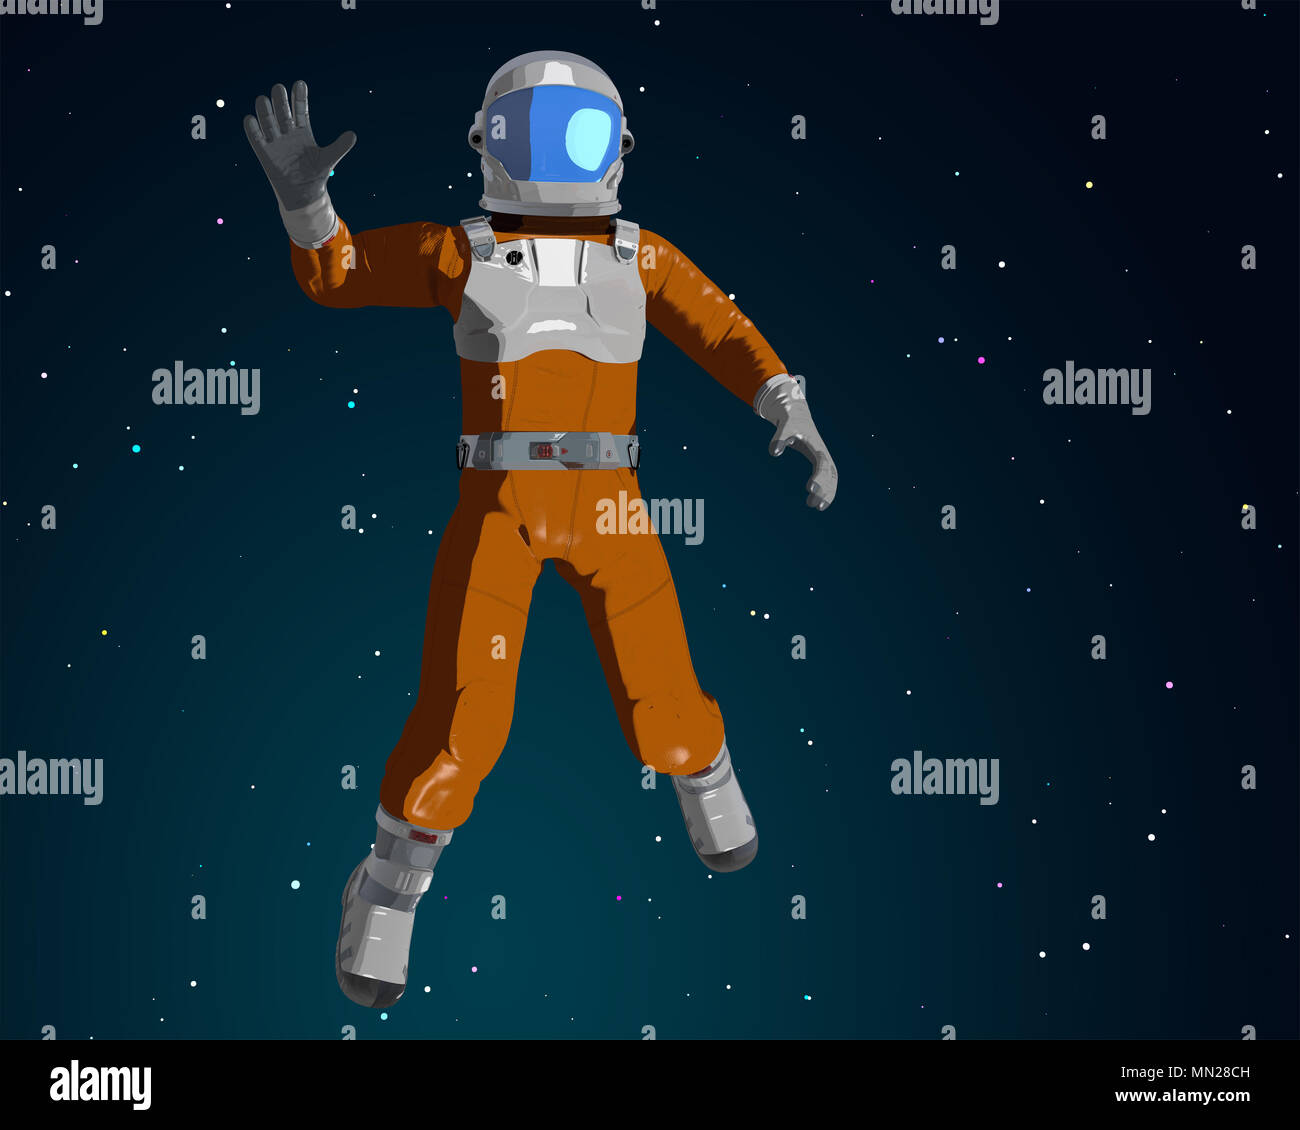 Waving cartoon astronaut waving in the space. 3D illustration Stock Photo